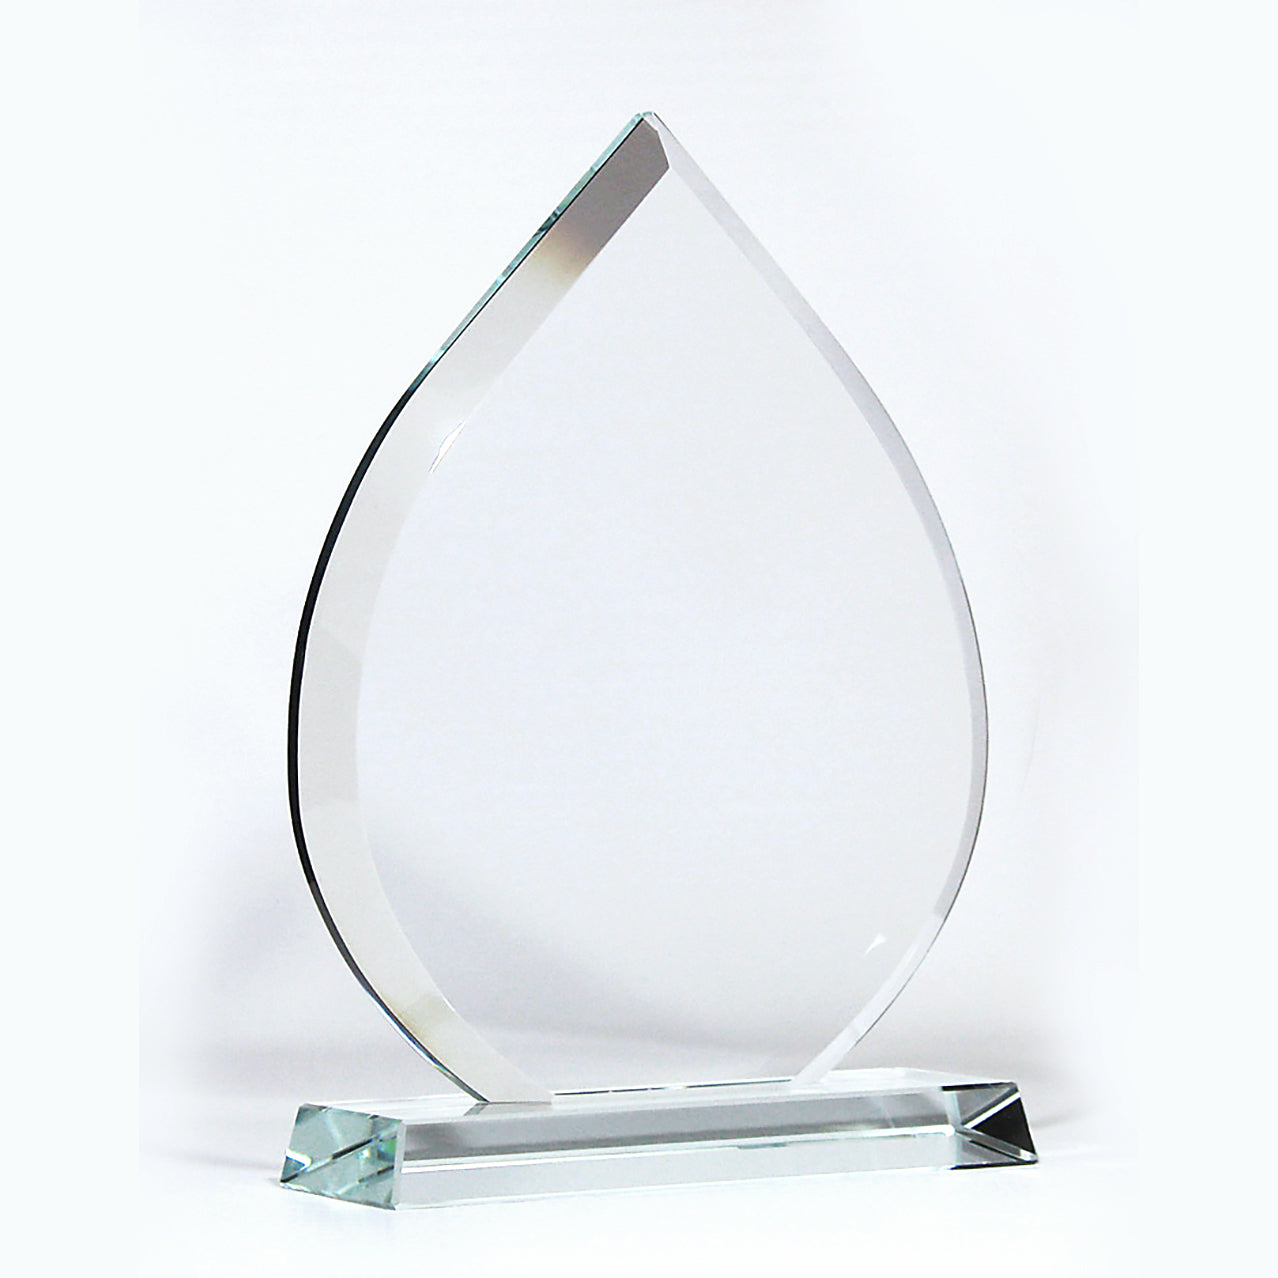 Glass Teardrop Award